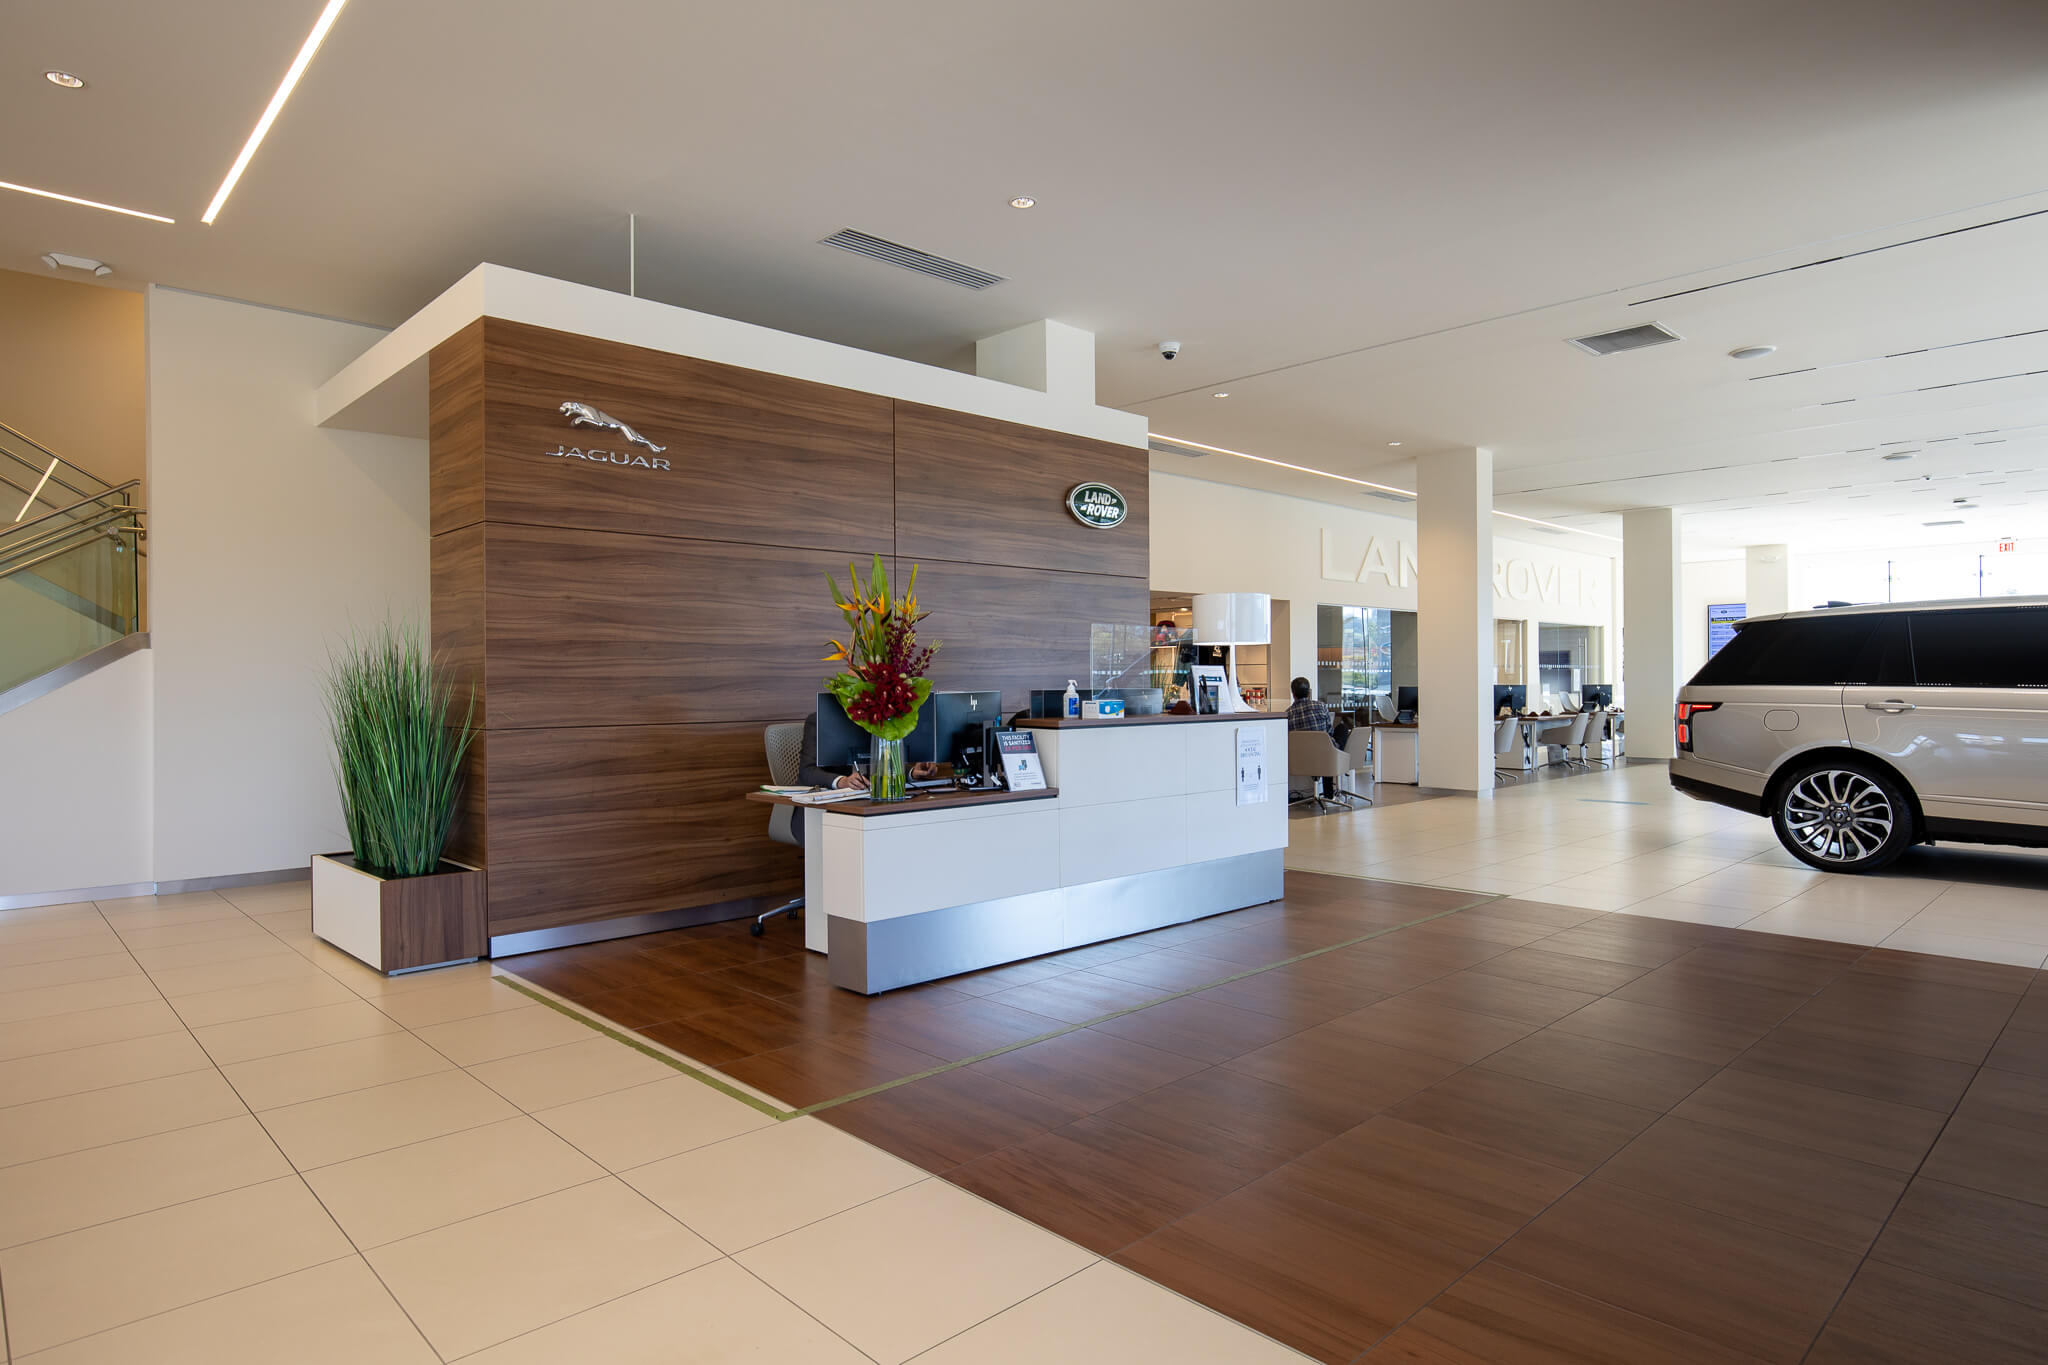 View of interior sales counter at Jaguar South Bay